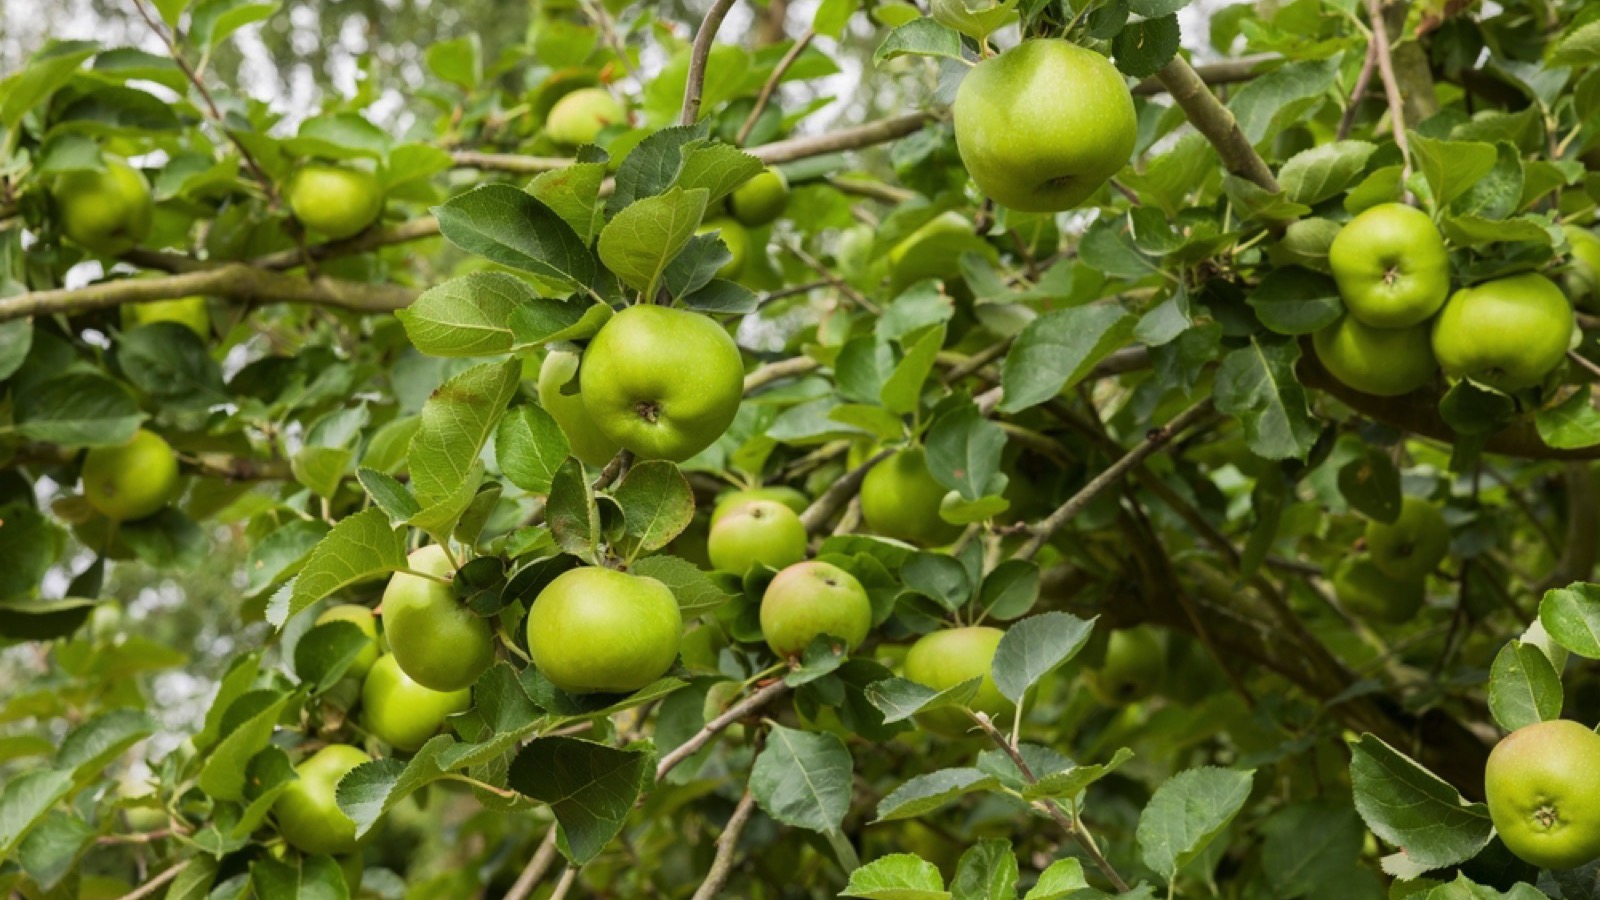 Bramley apples